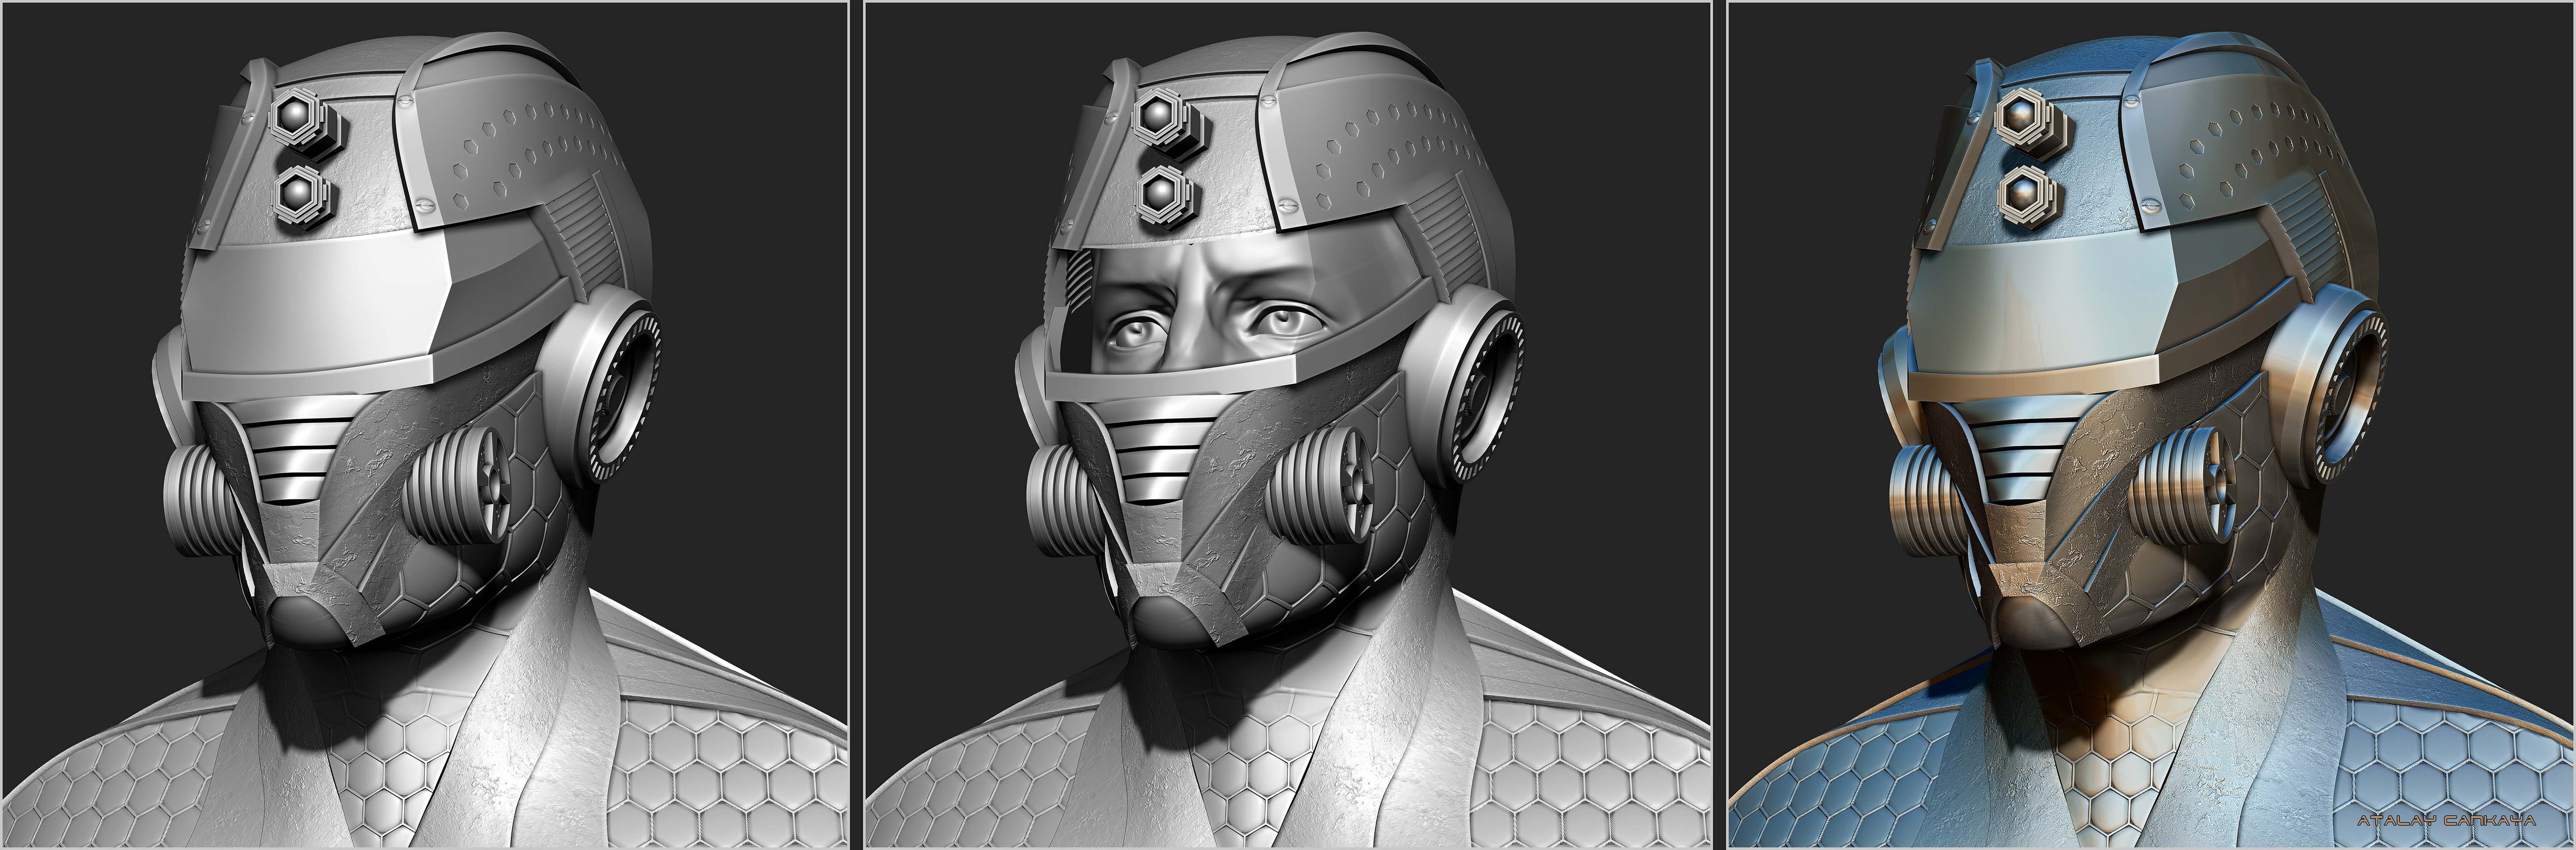 Futuristic Soldier Helmet - Clay 3.jpg